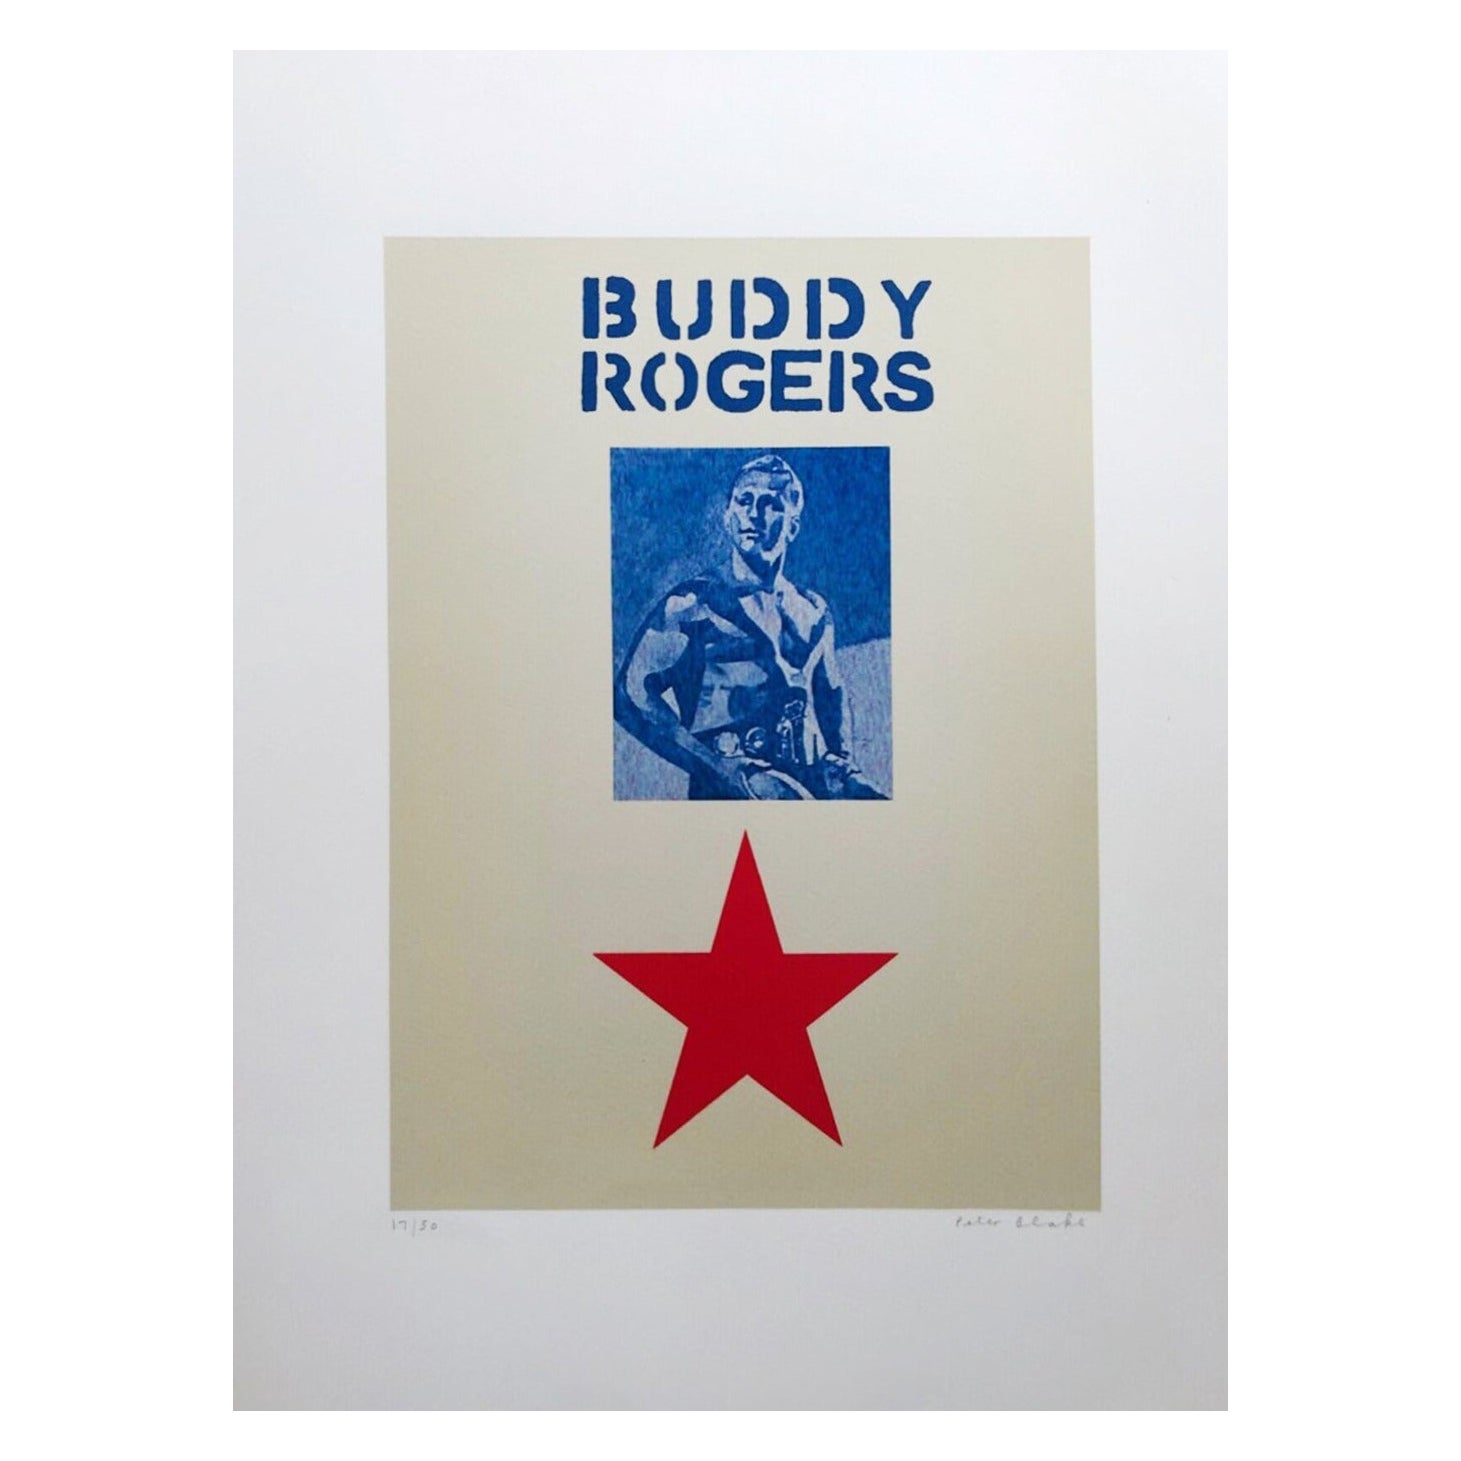 2003 Peter Blake - Buddy Rogers - Motif 10 Original Signed Art Print For Sale